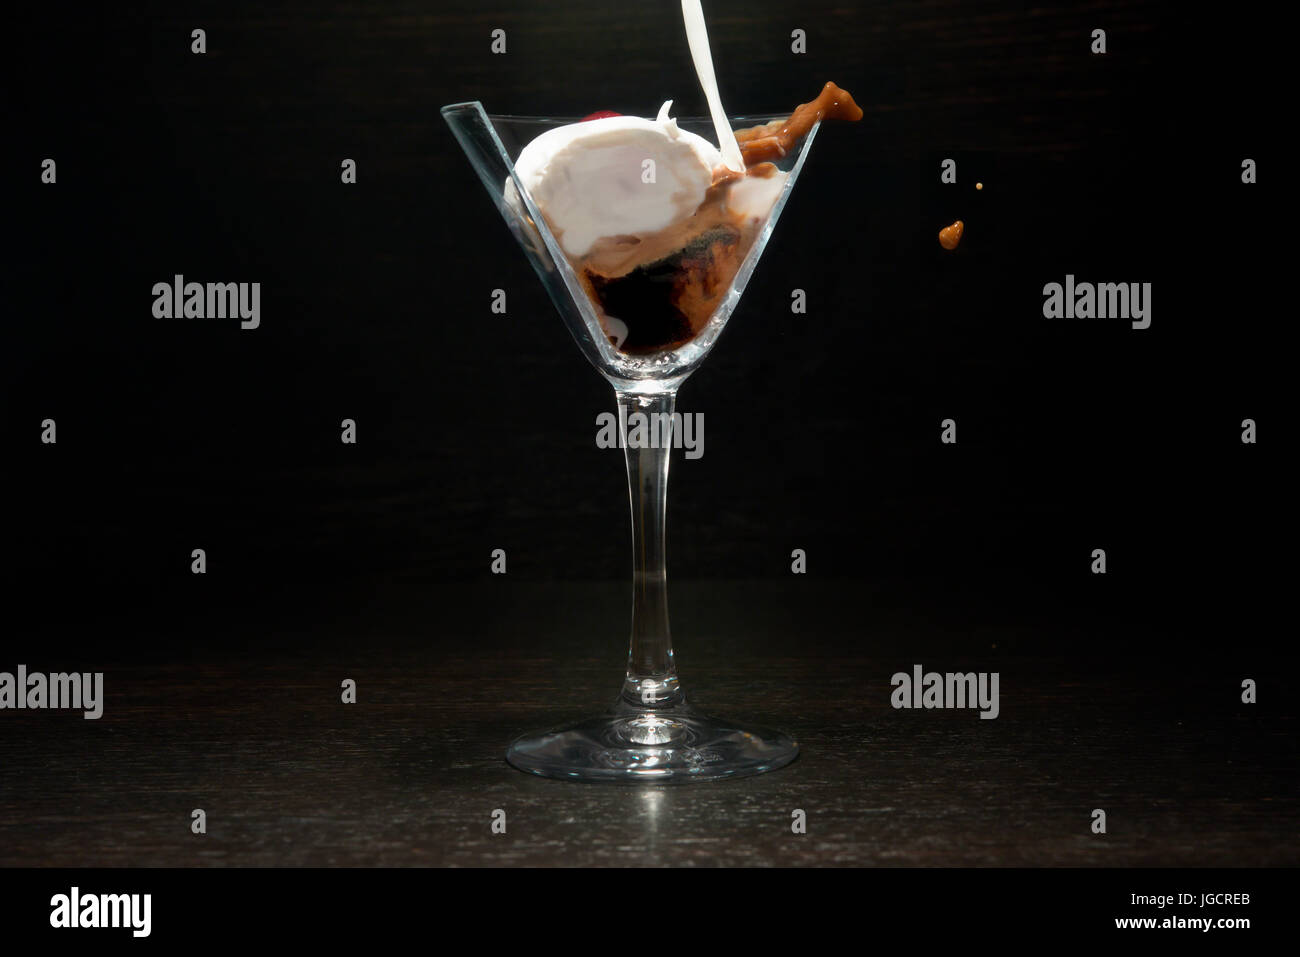 Cross section of an Irish coffee drink Stock Photo